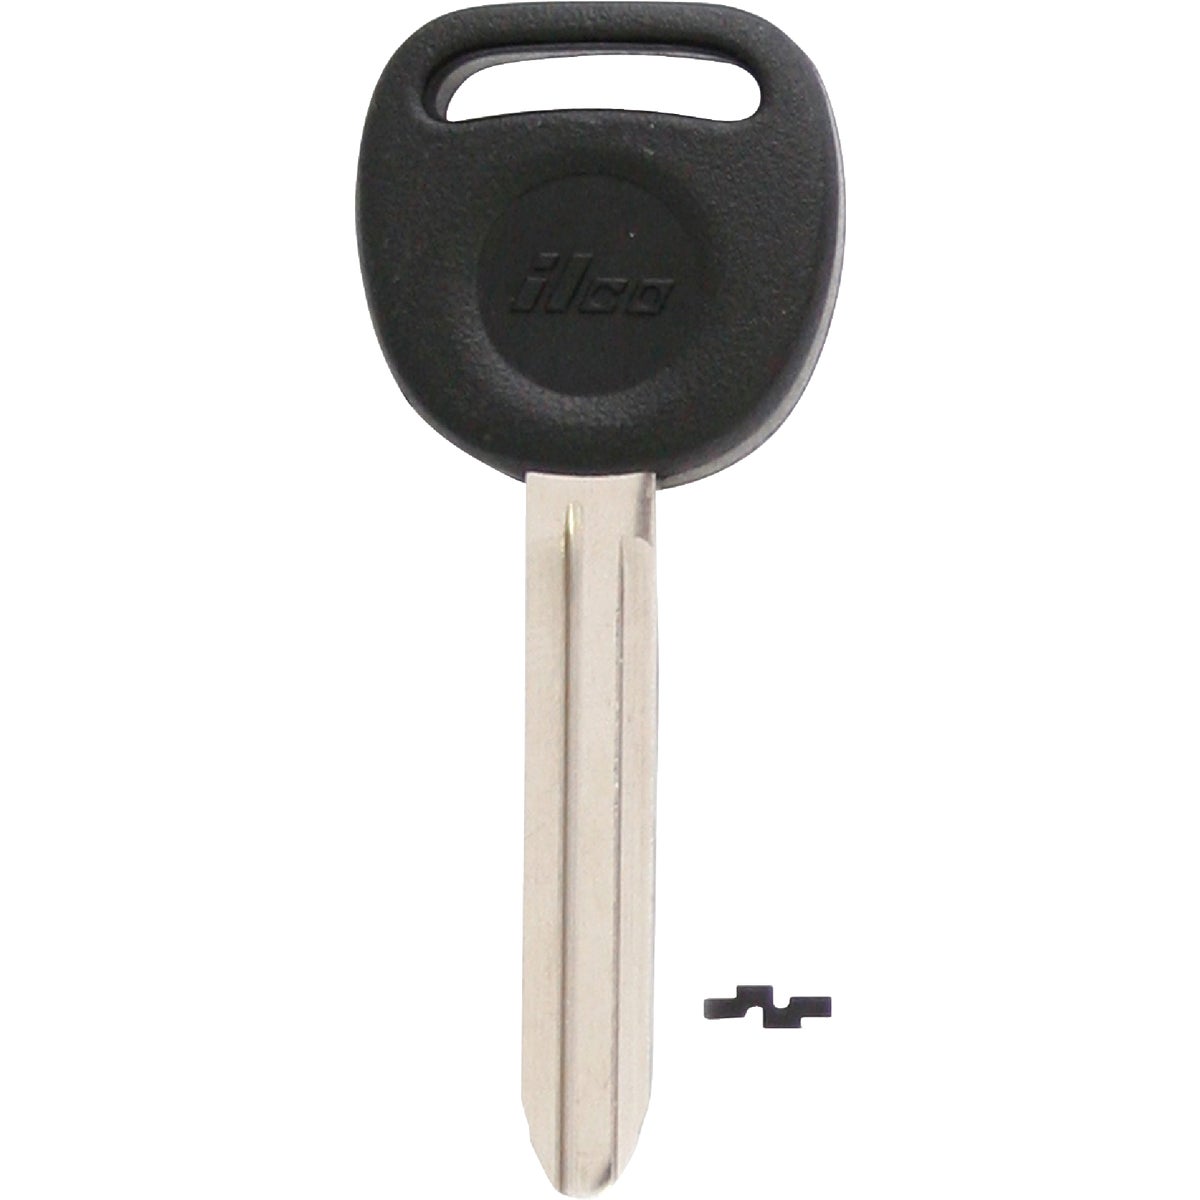 ILCO GM Nickel Plated Automotive Key, B110-P / B110P (5-Pack)